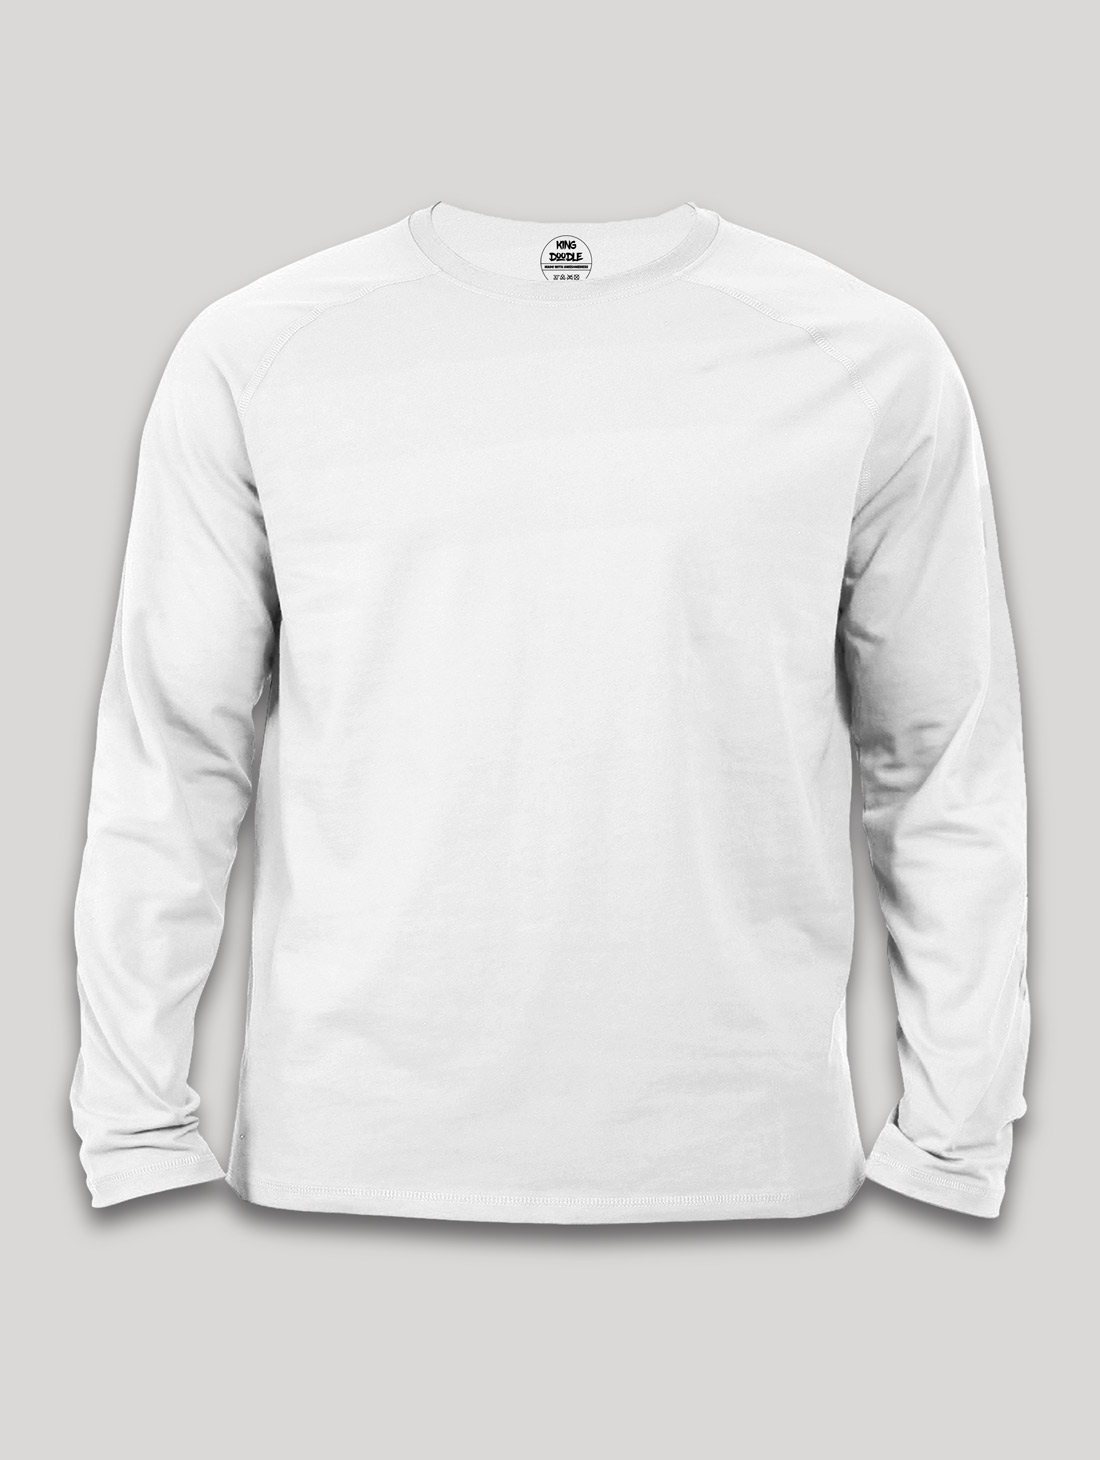 Customized White Full Sleeve T Shirts Online